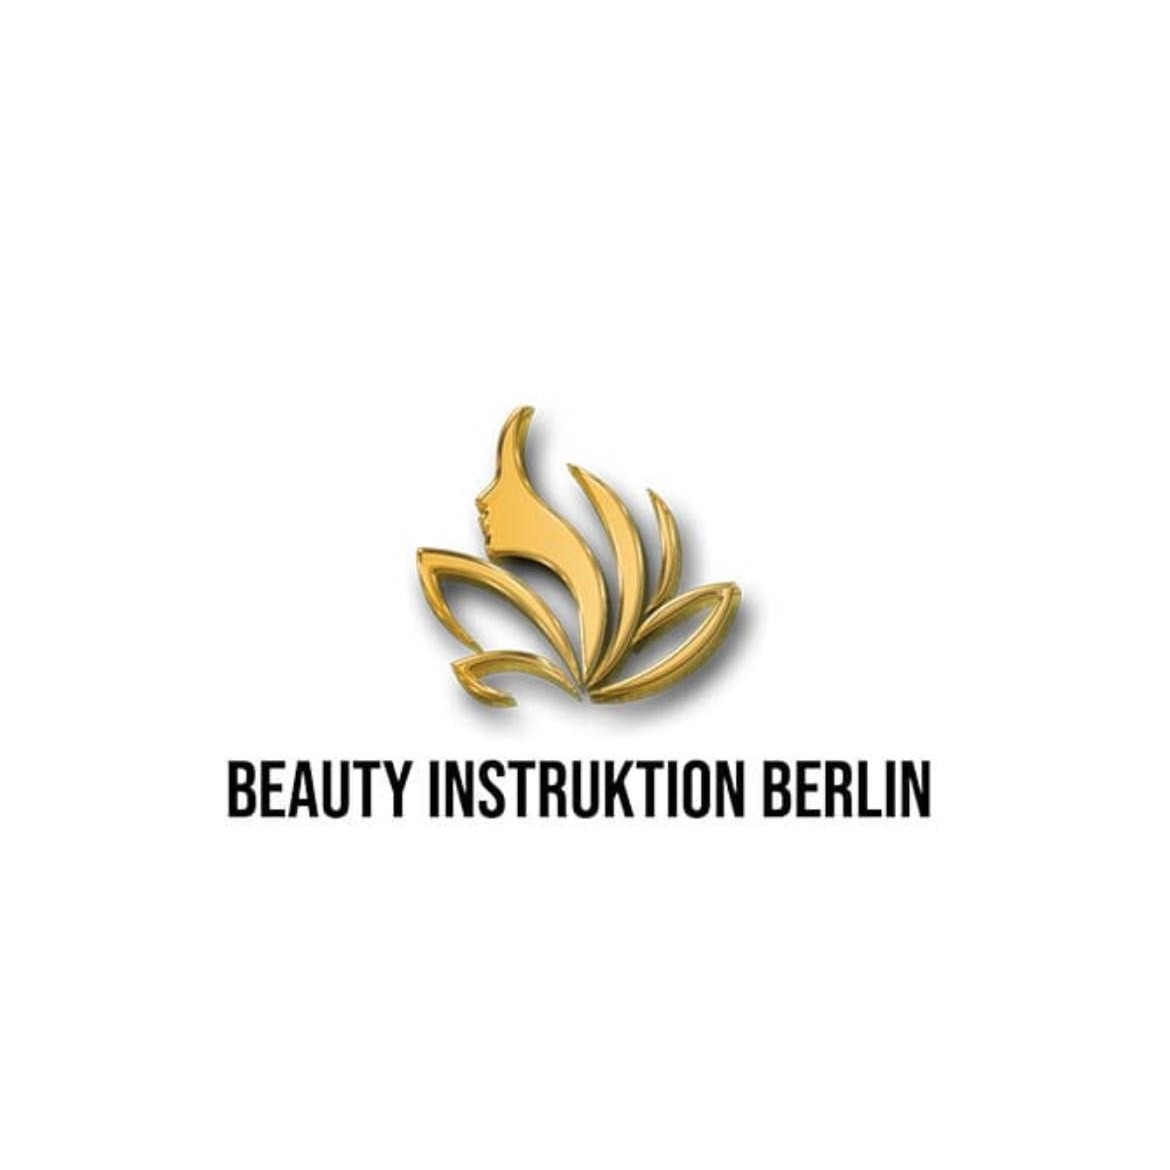 BeautyInstruktionBerlin - Inh. Maria Soldan in Berlin - Logo